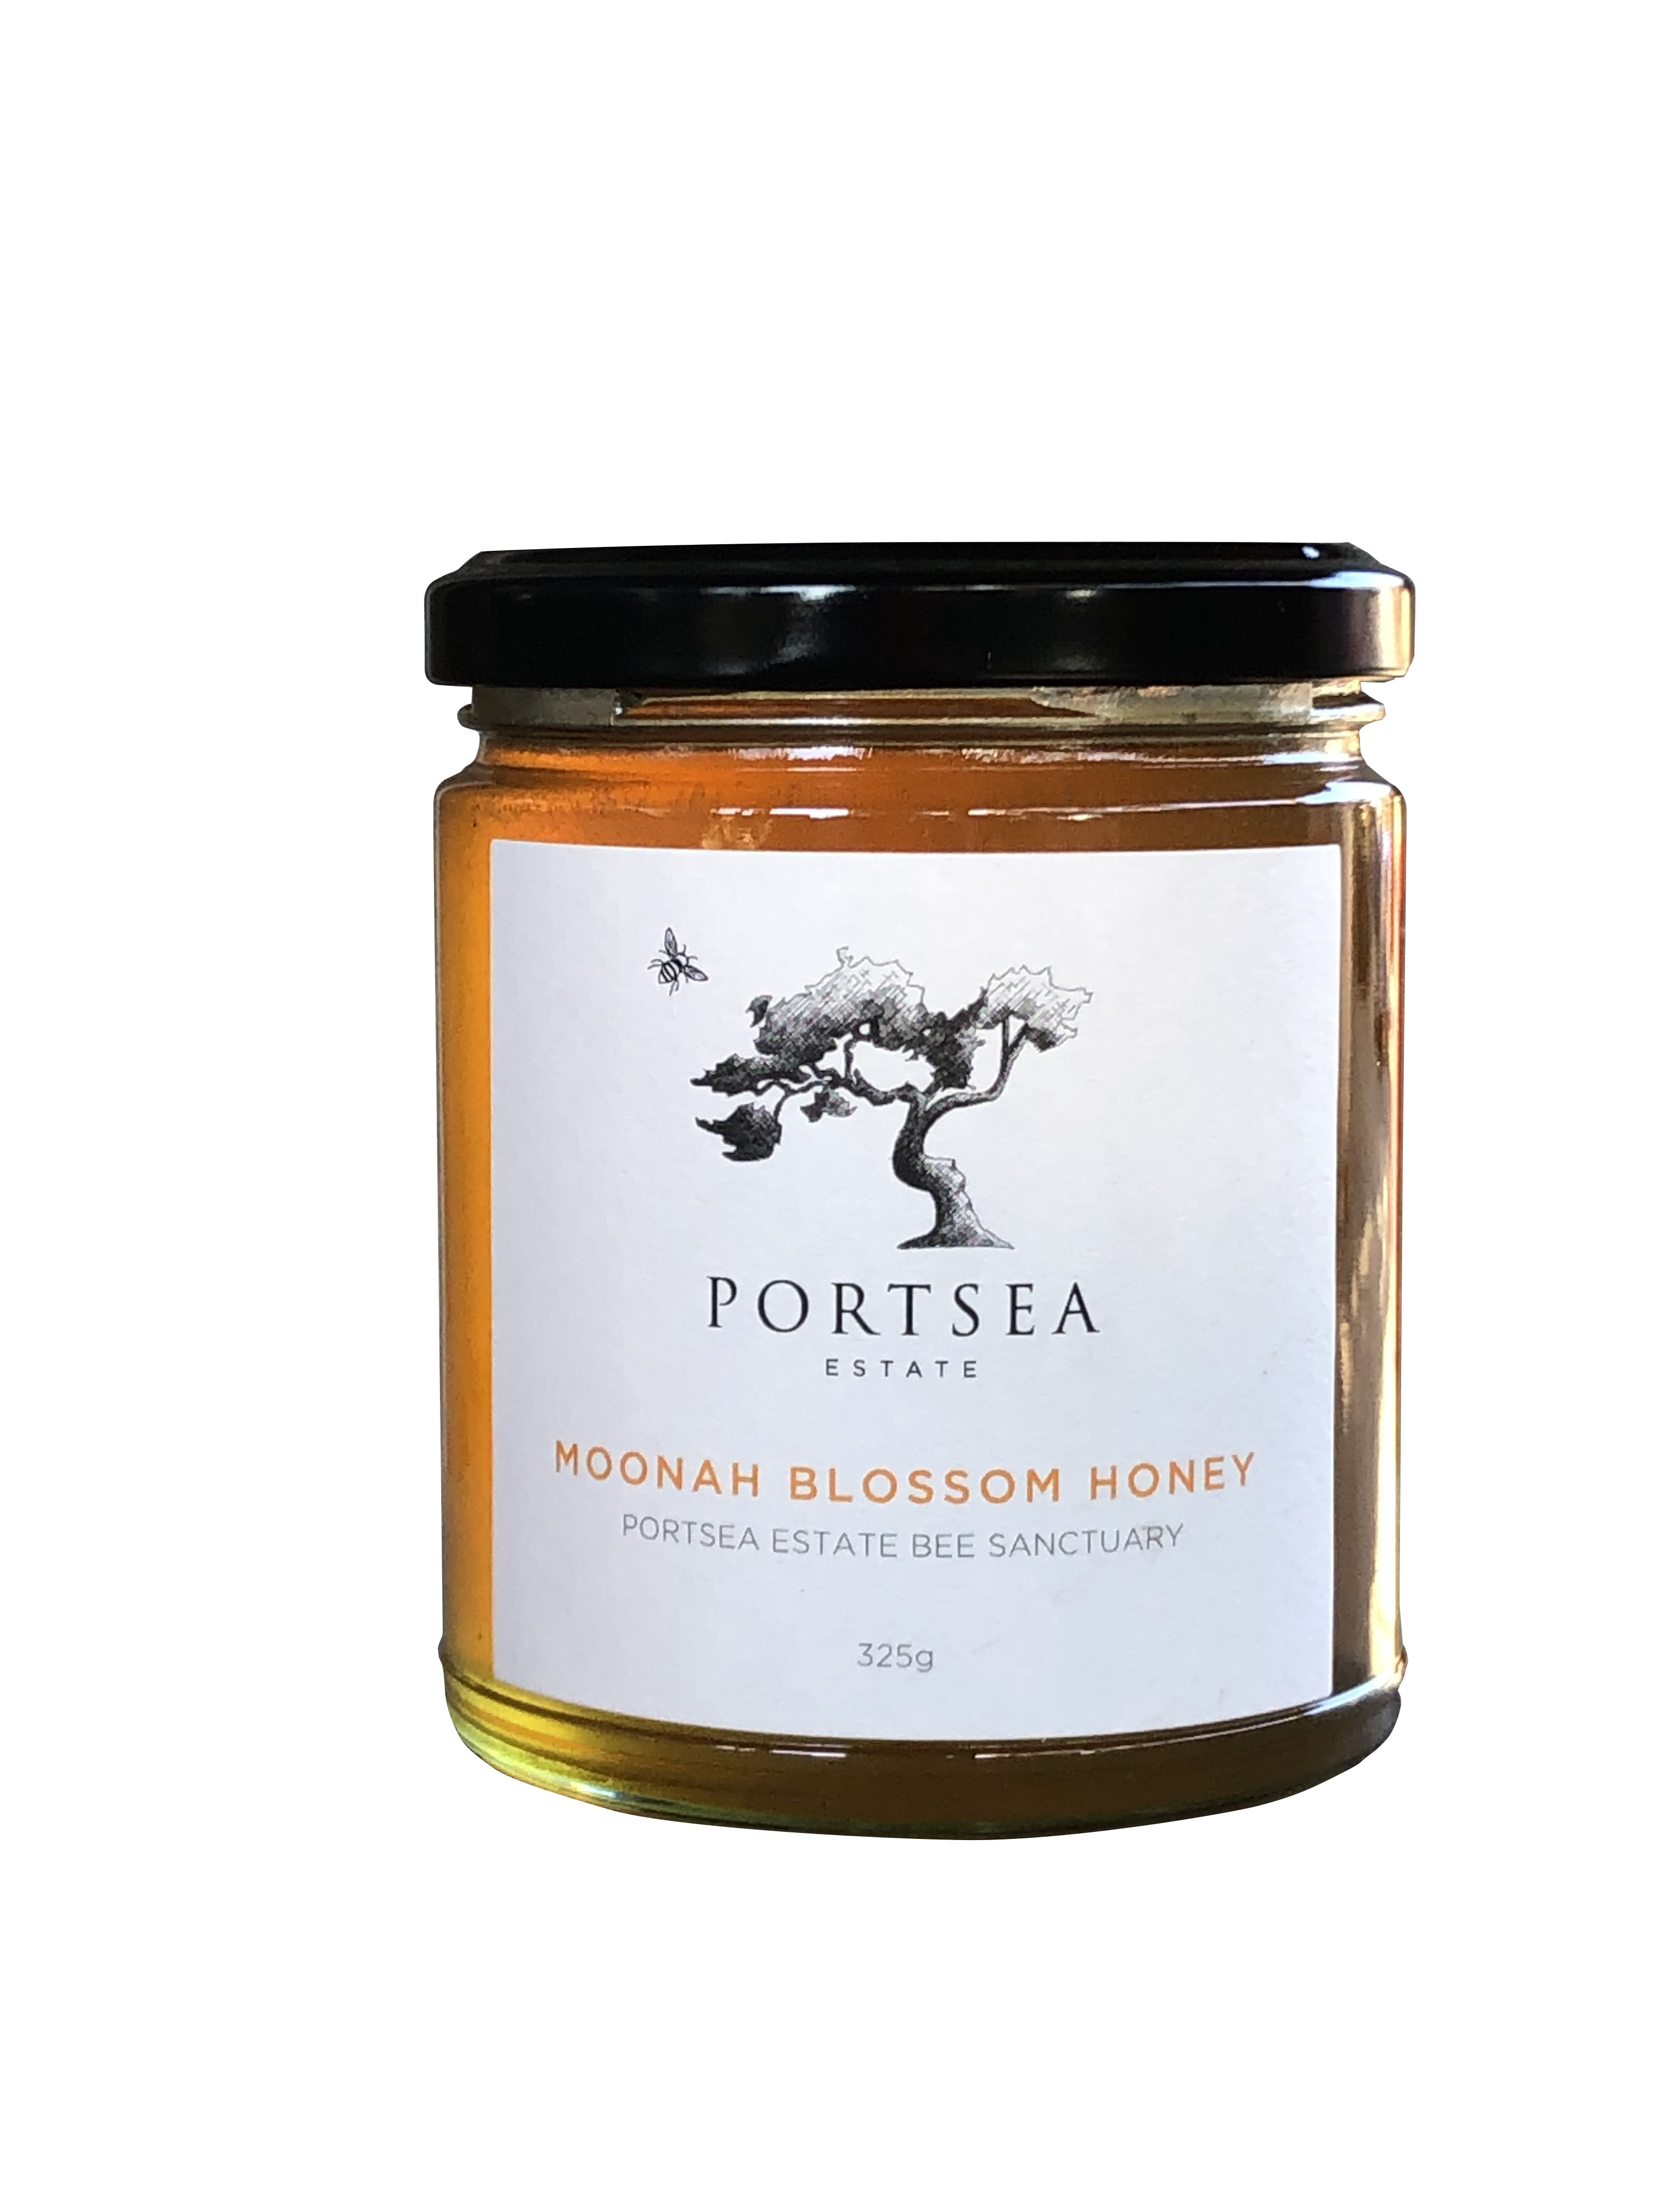 Portsea Estate Moonah Blossom Honey